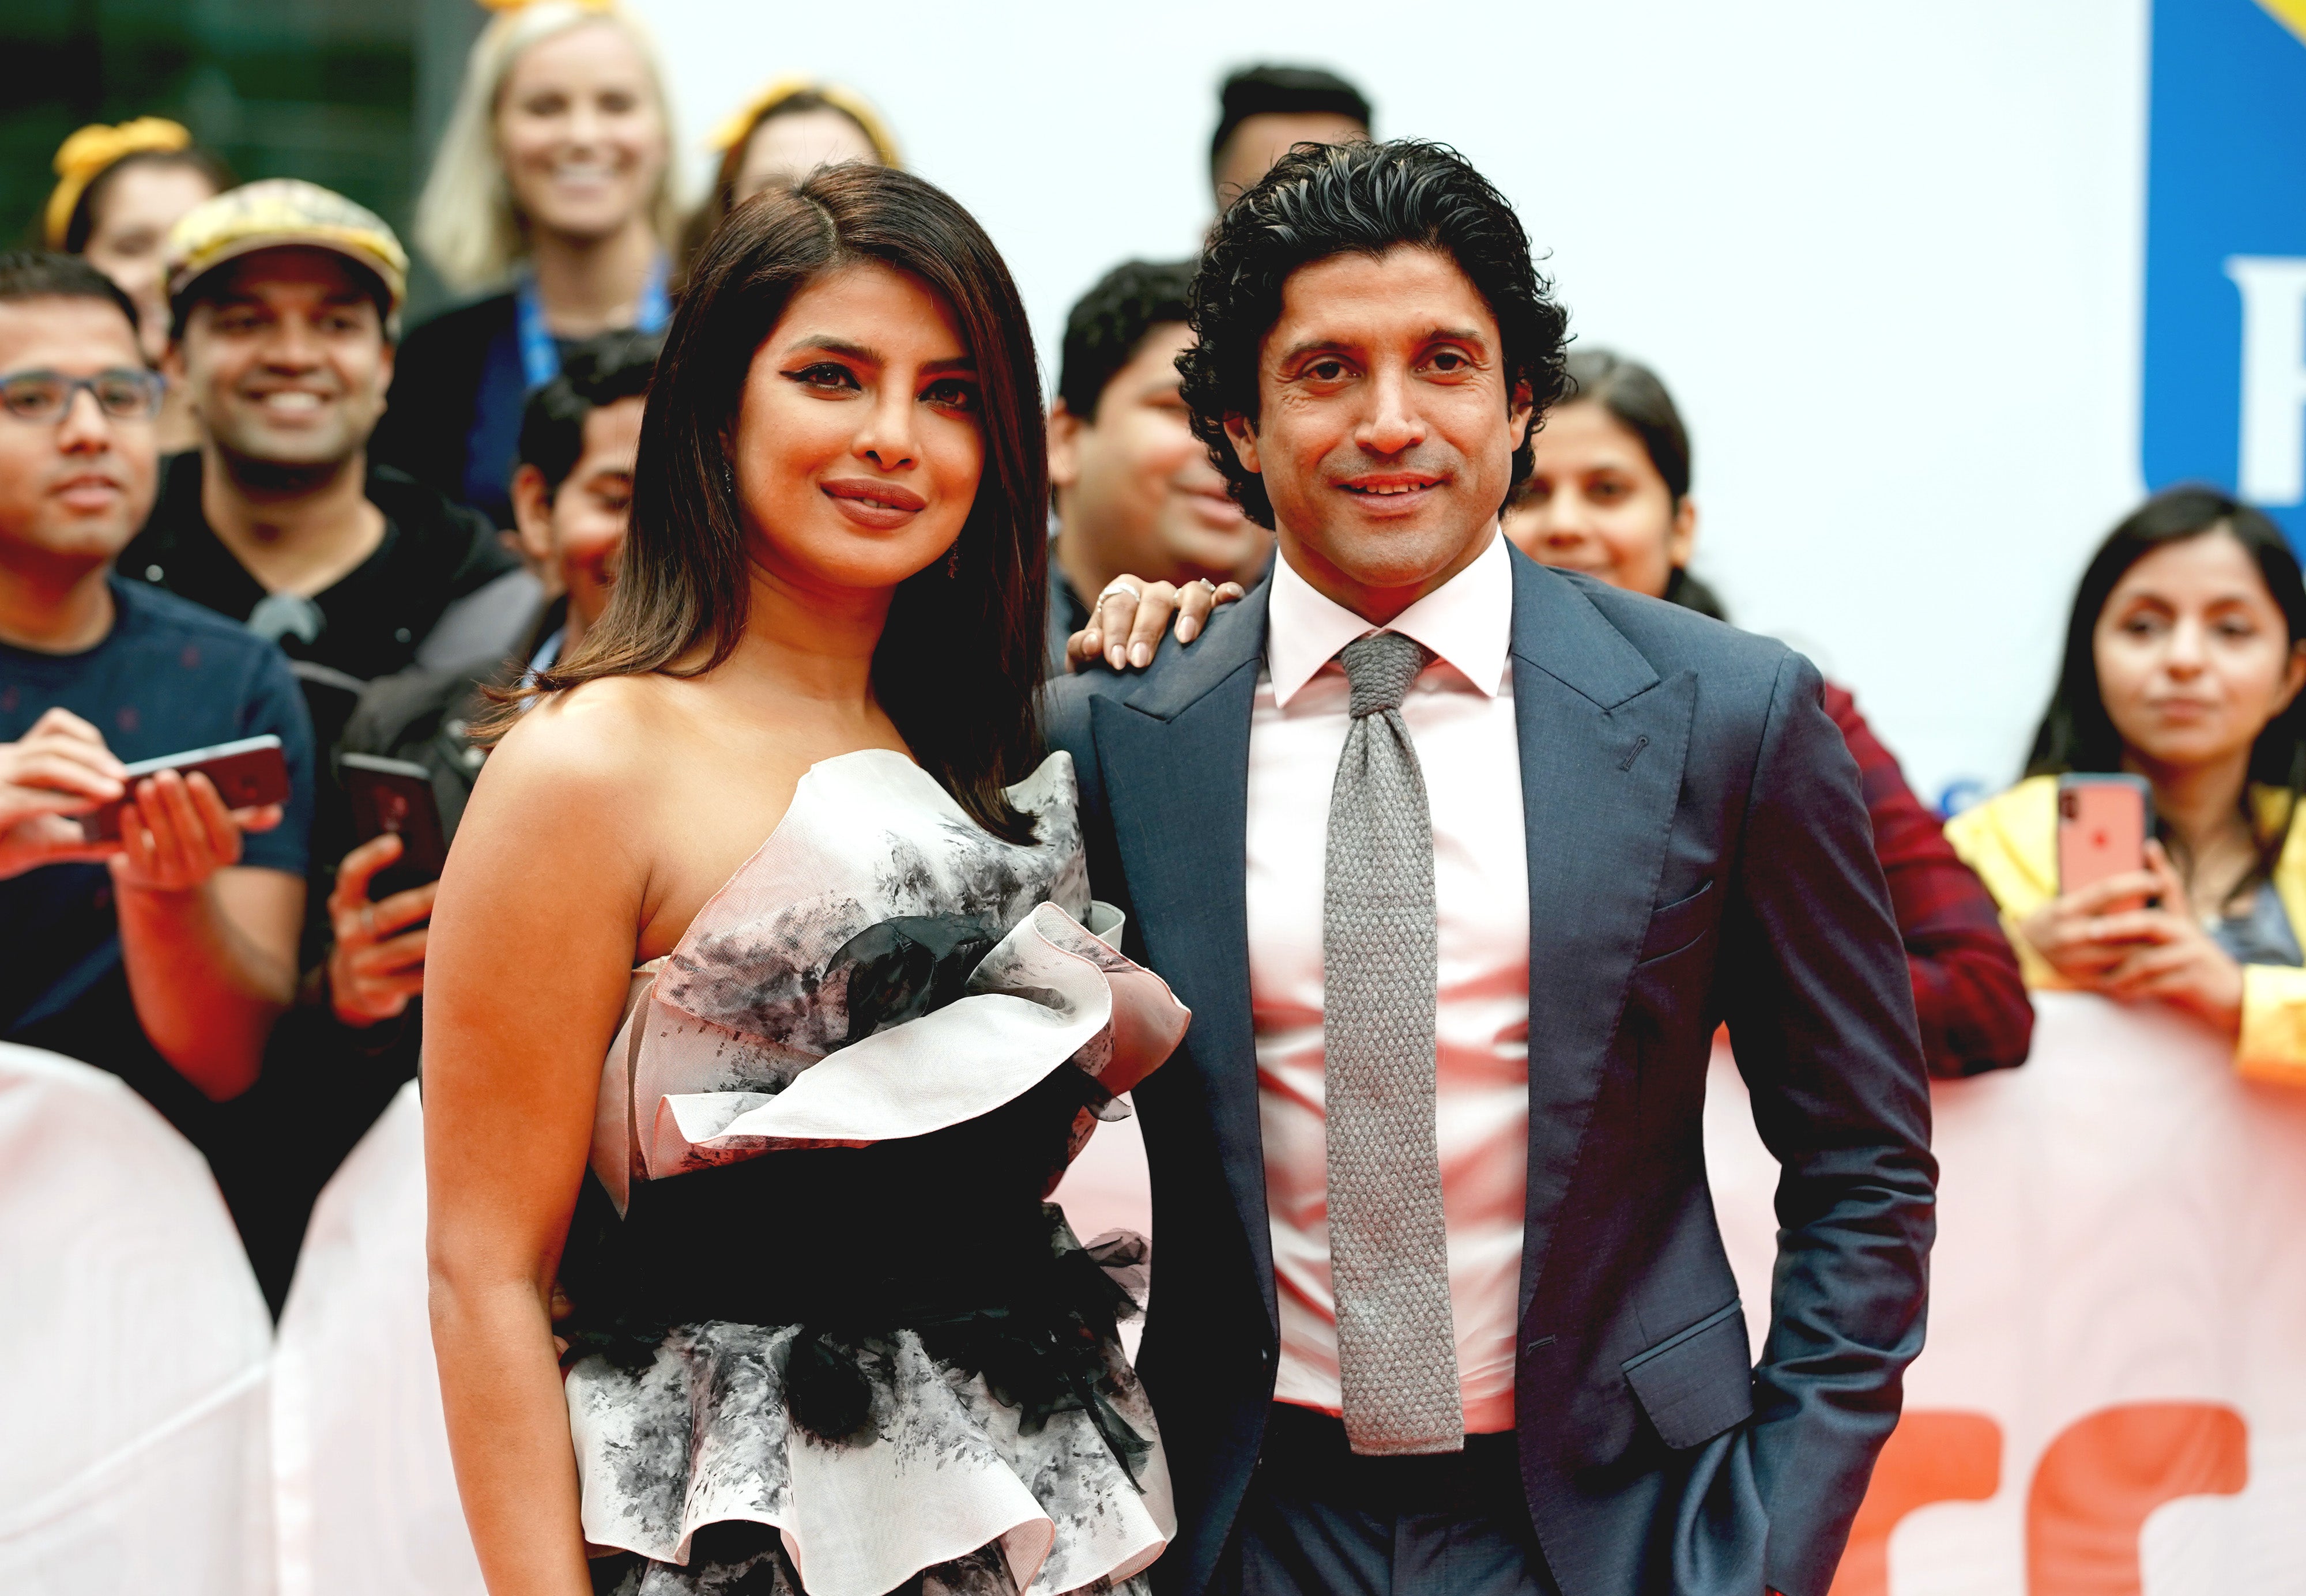 File image: Priyanka Chopra Jonas and Farhan Akhtar attend "The Sky Is Pink" premiere during the 2019 Toronto International Film Festival